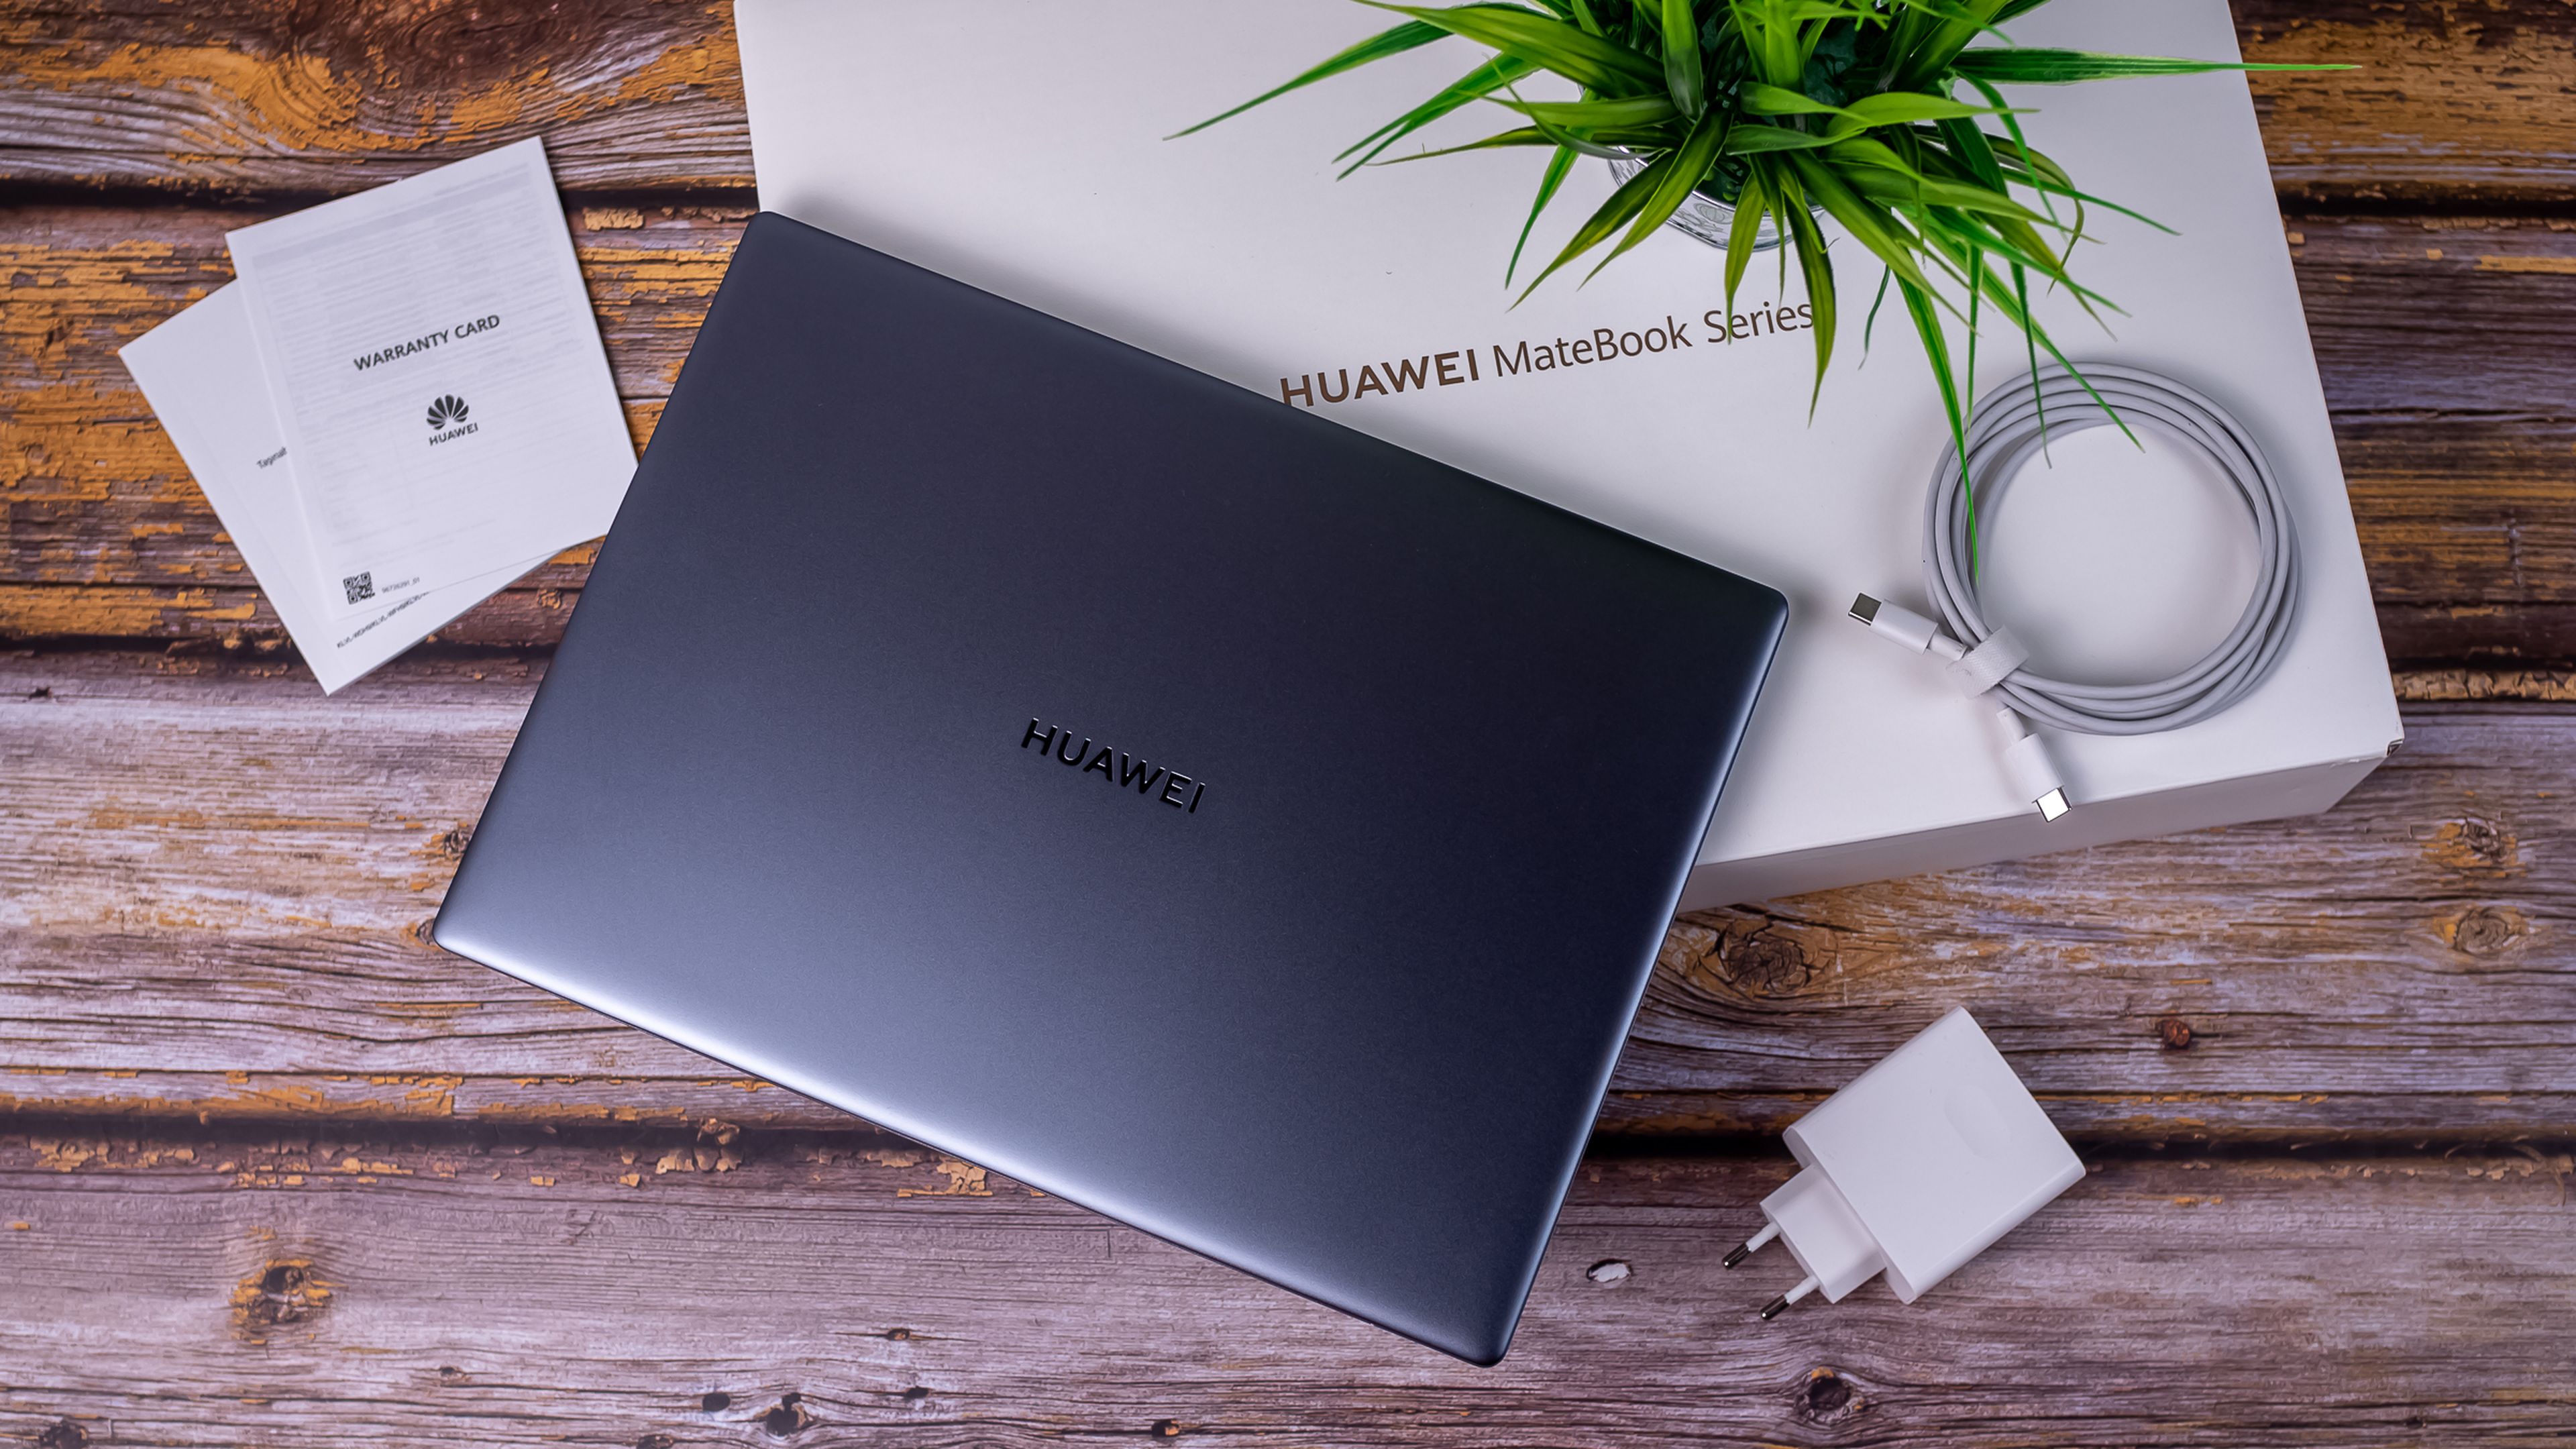 Huawei MateBook 14 (2020), análisis y opinión